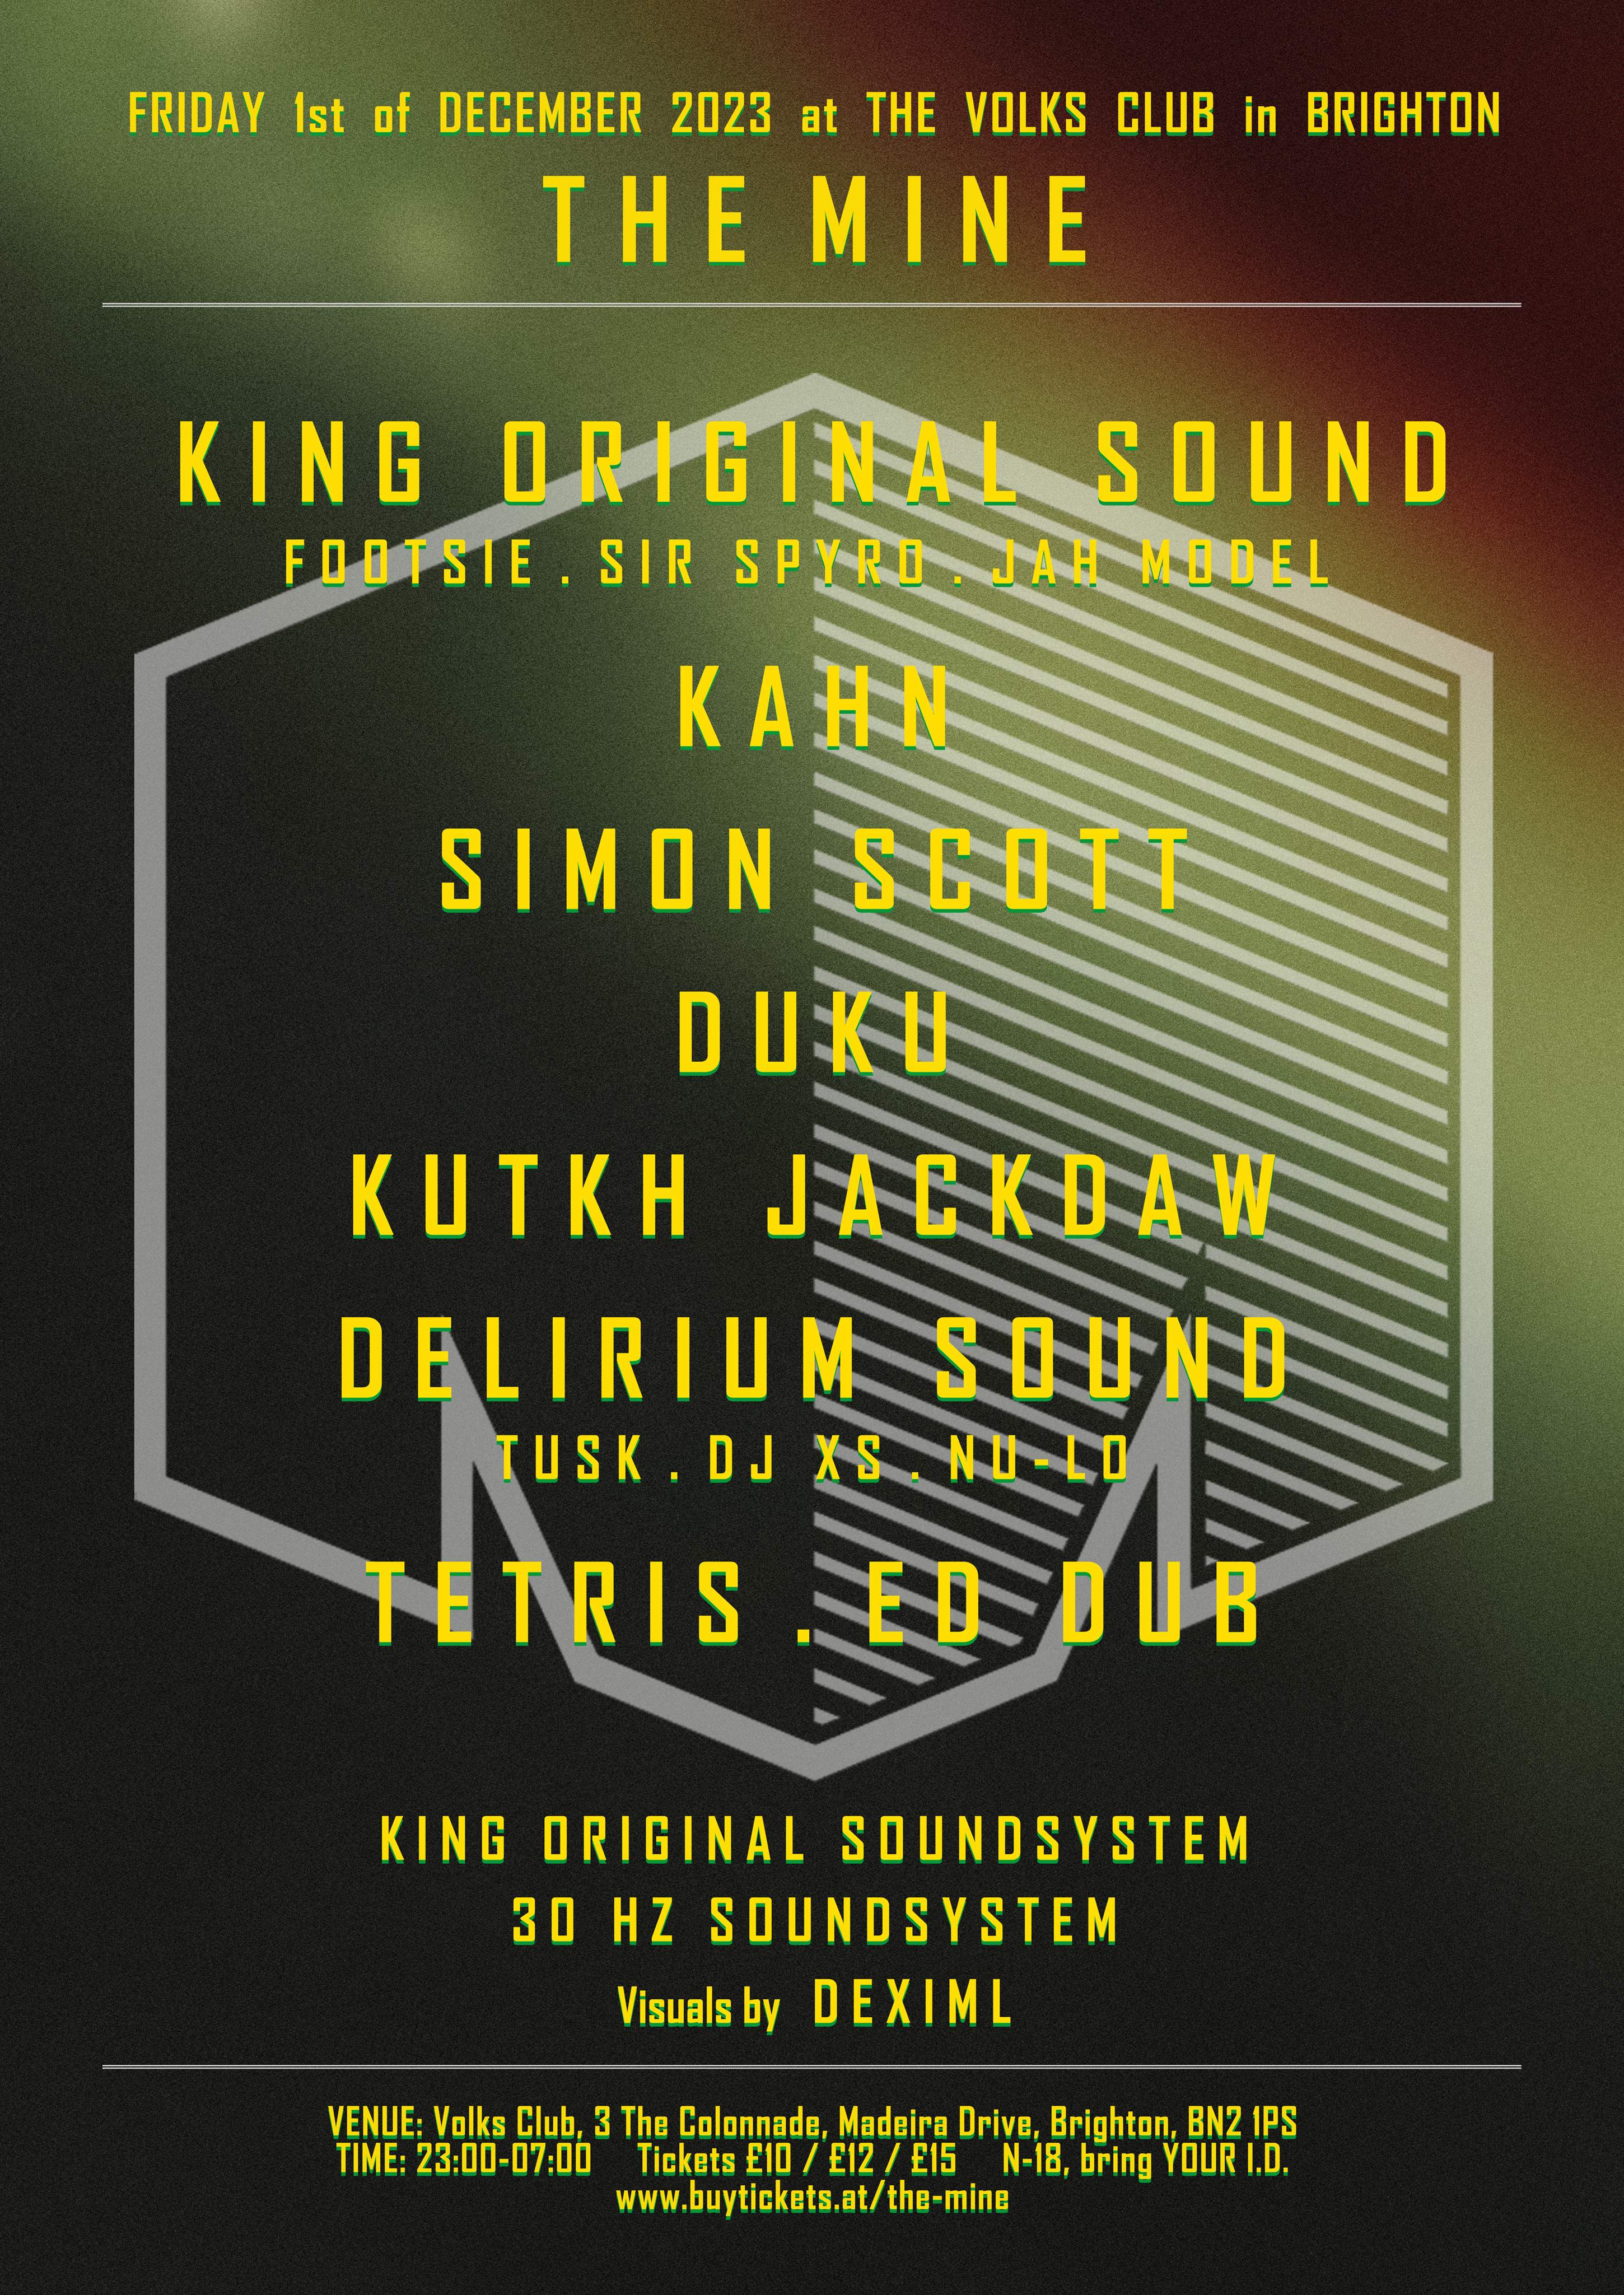 THE MINE with King Original Sound with Footsie, Sir Spyro & Jah Model + special guest Kahn - フライヤー裏